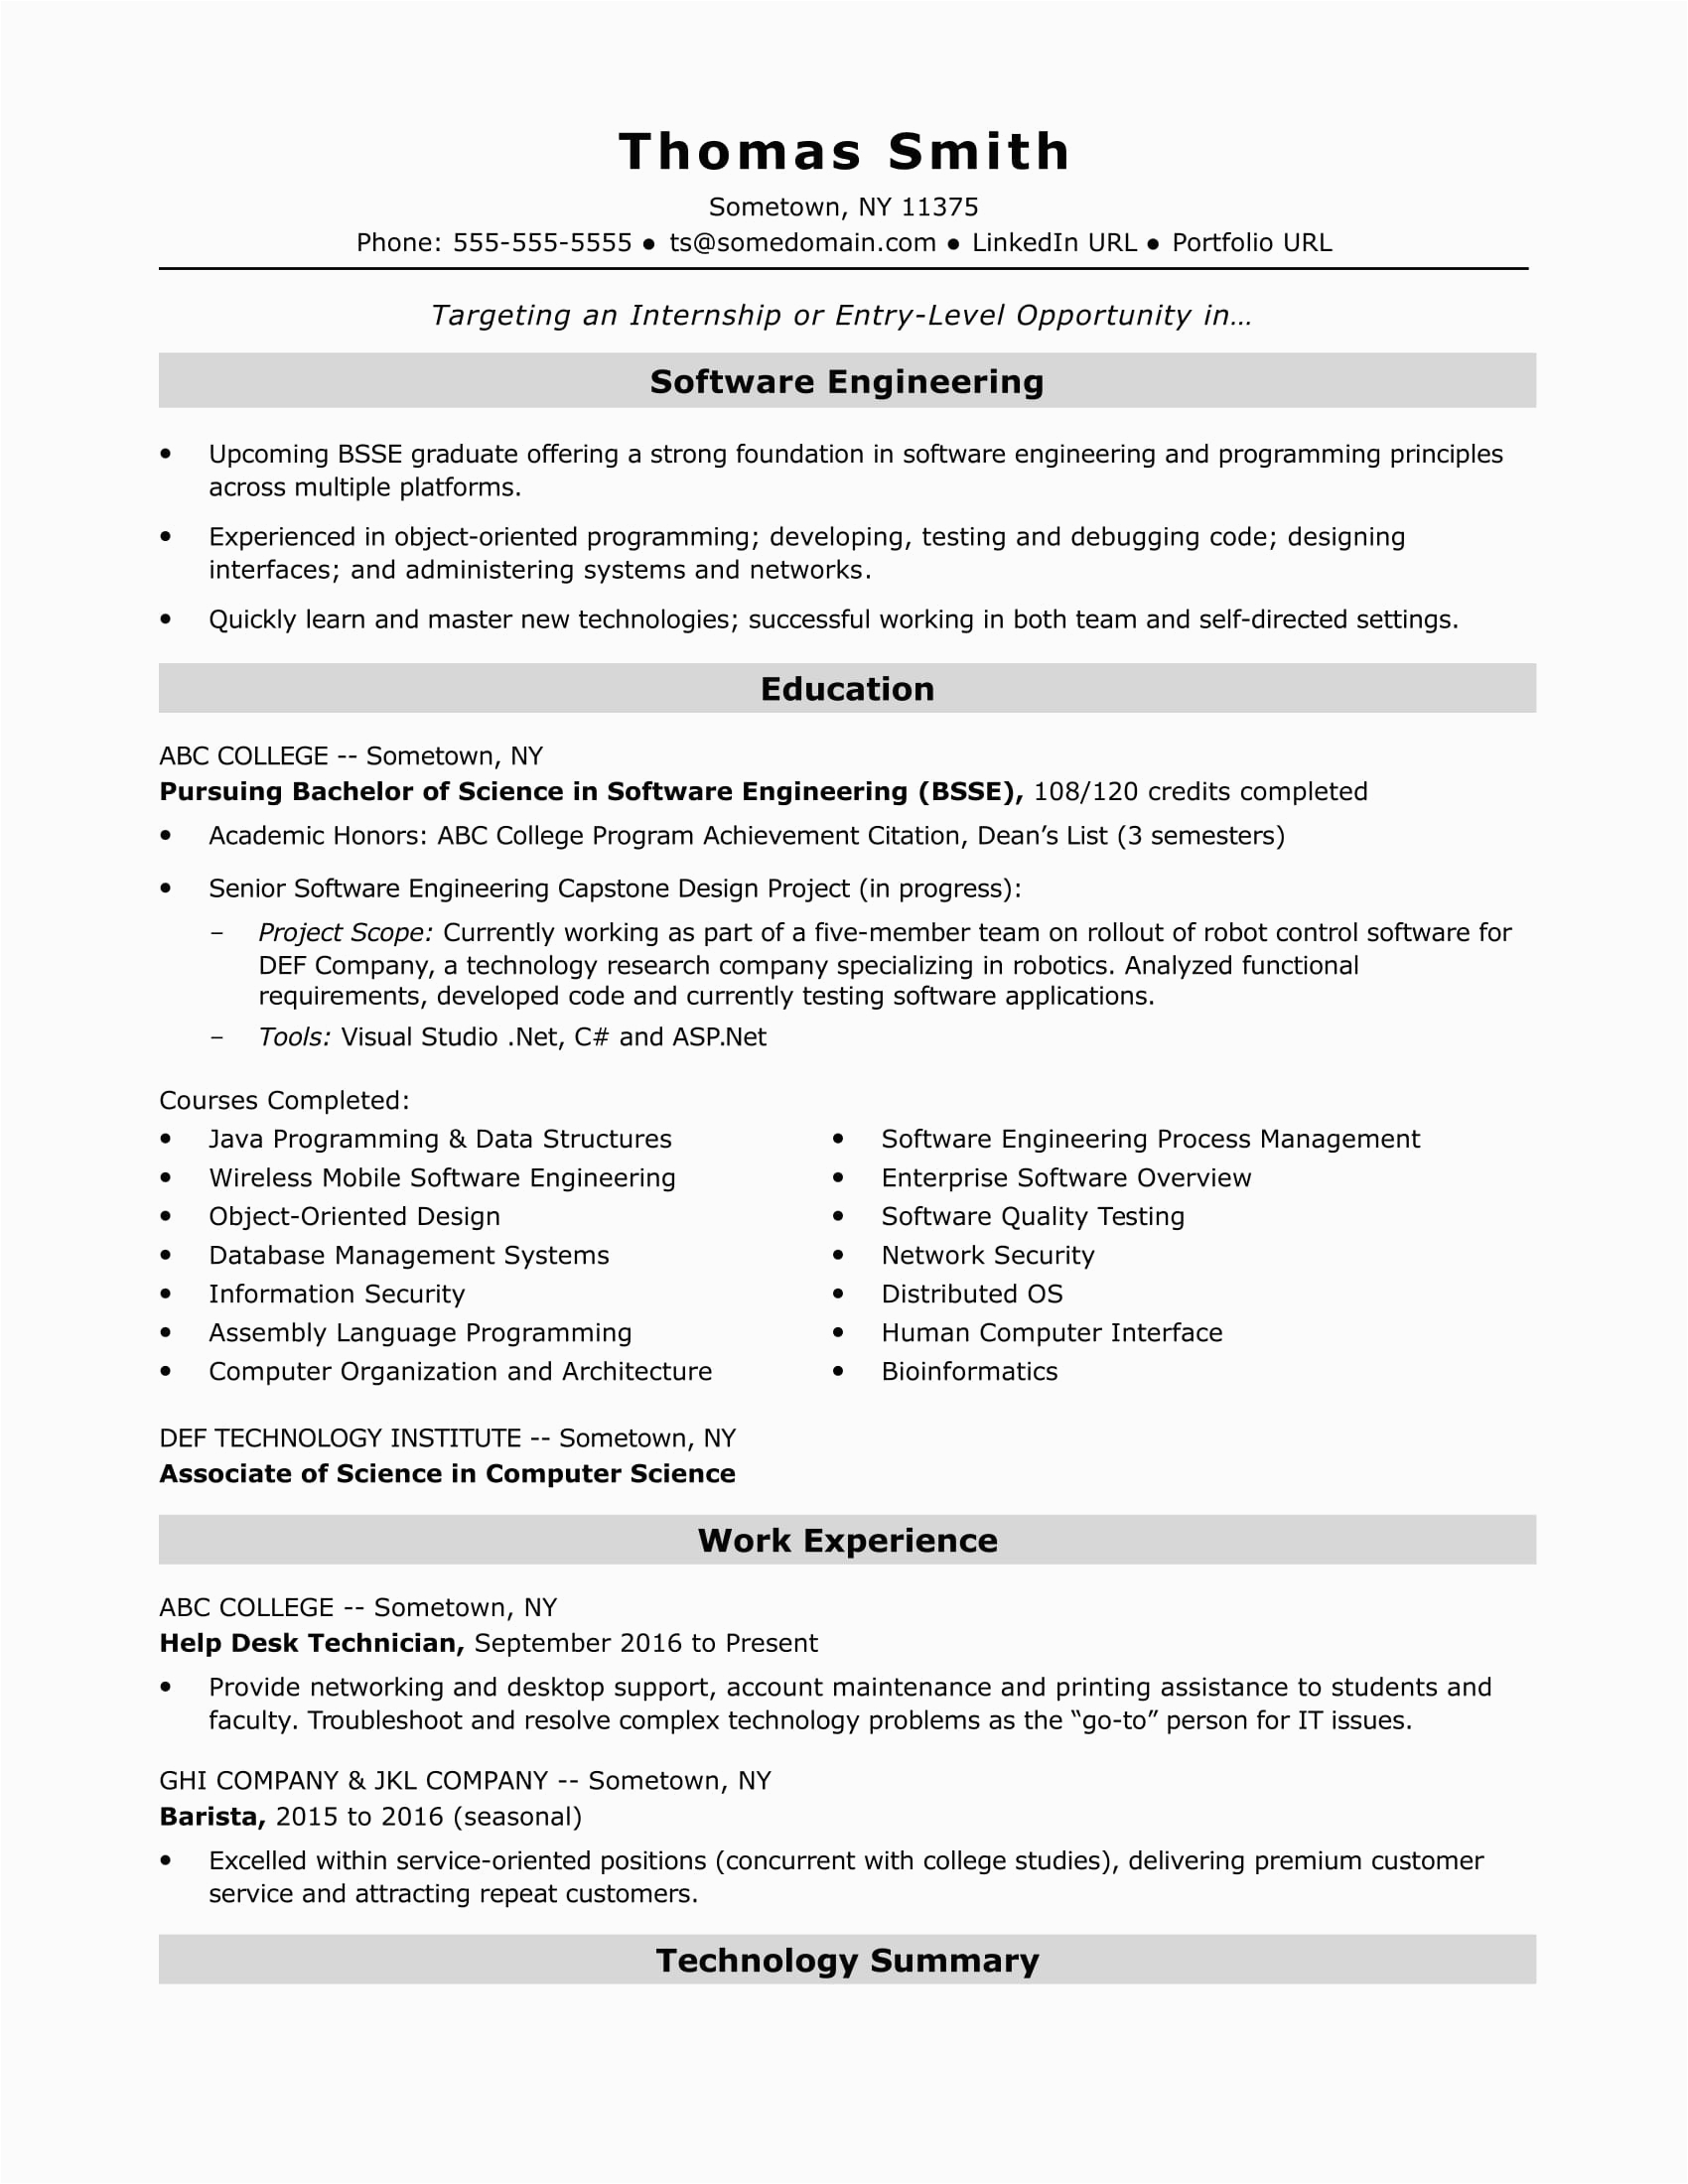 Sample Entry Level software Engineer Resume Entry Level software Engineer Resume Sample